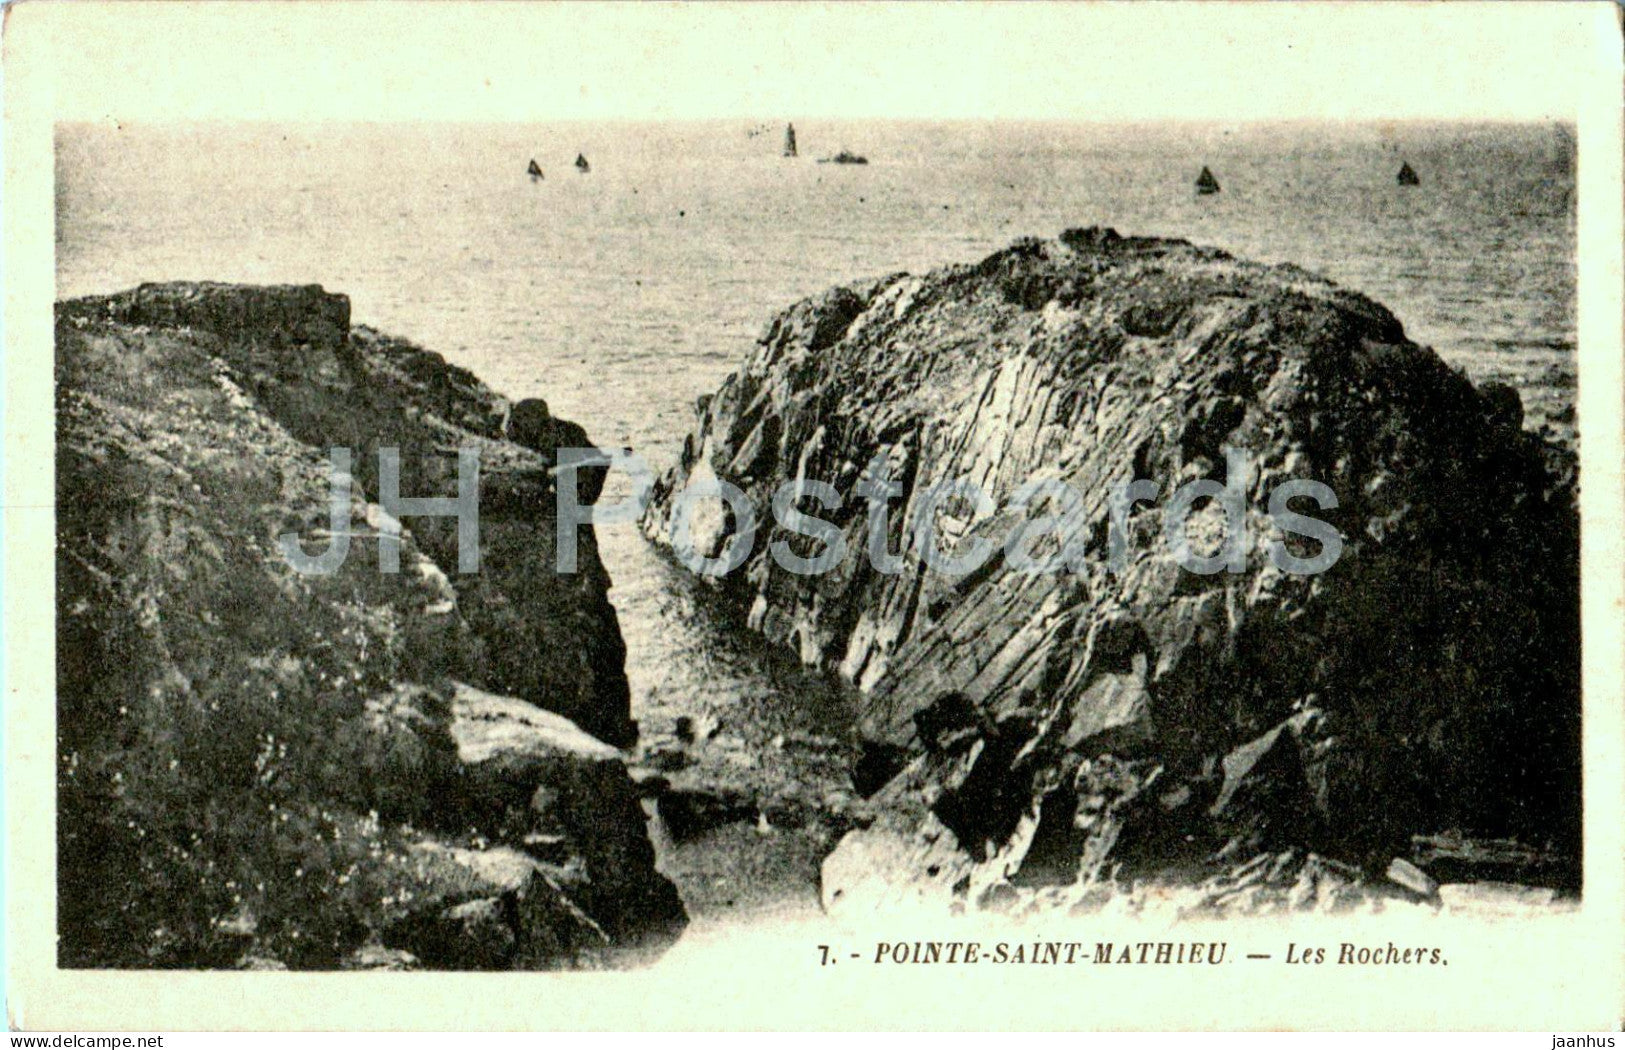 Pointe Saint Mathieu - Les Rochers - The Rocks - 7 - old postcard - France - unused - JH Postcards